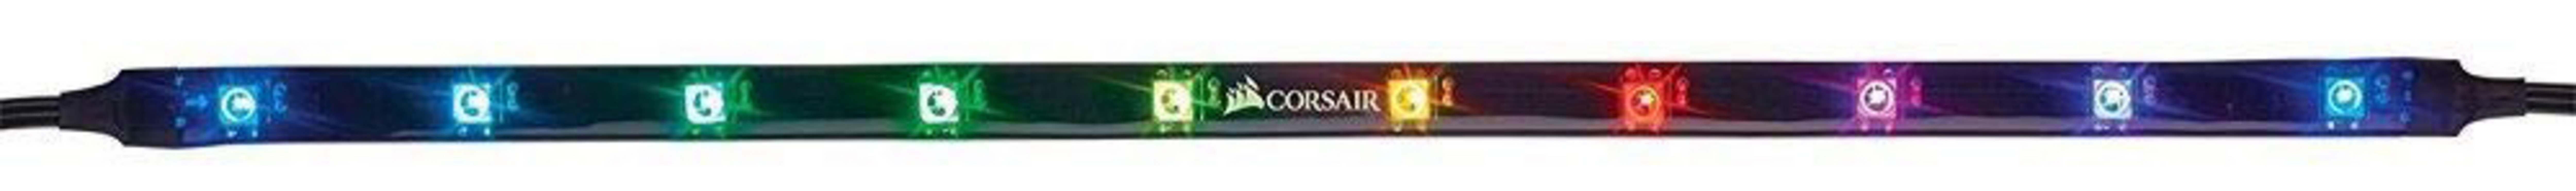 CORSAIR CL-8930002 KIT, 410 PRO LIGHTING Gehäuseleuchte, RGB LED EXPANSION mm